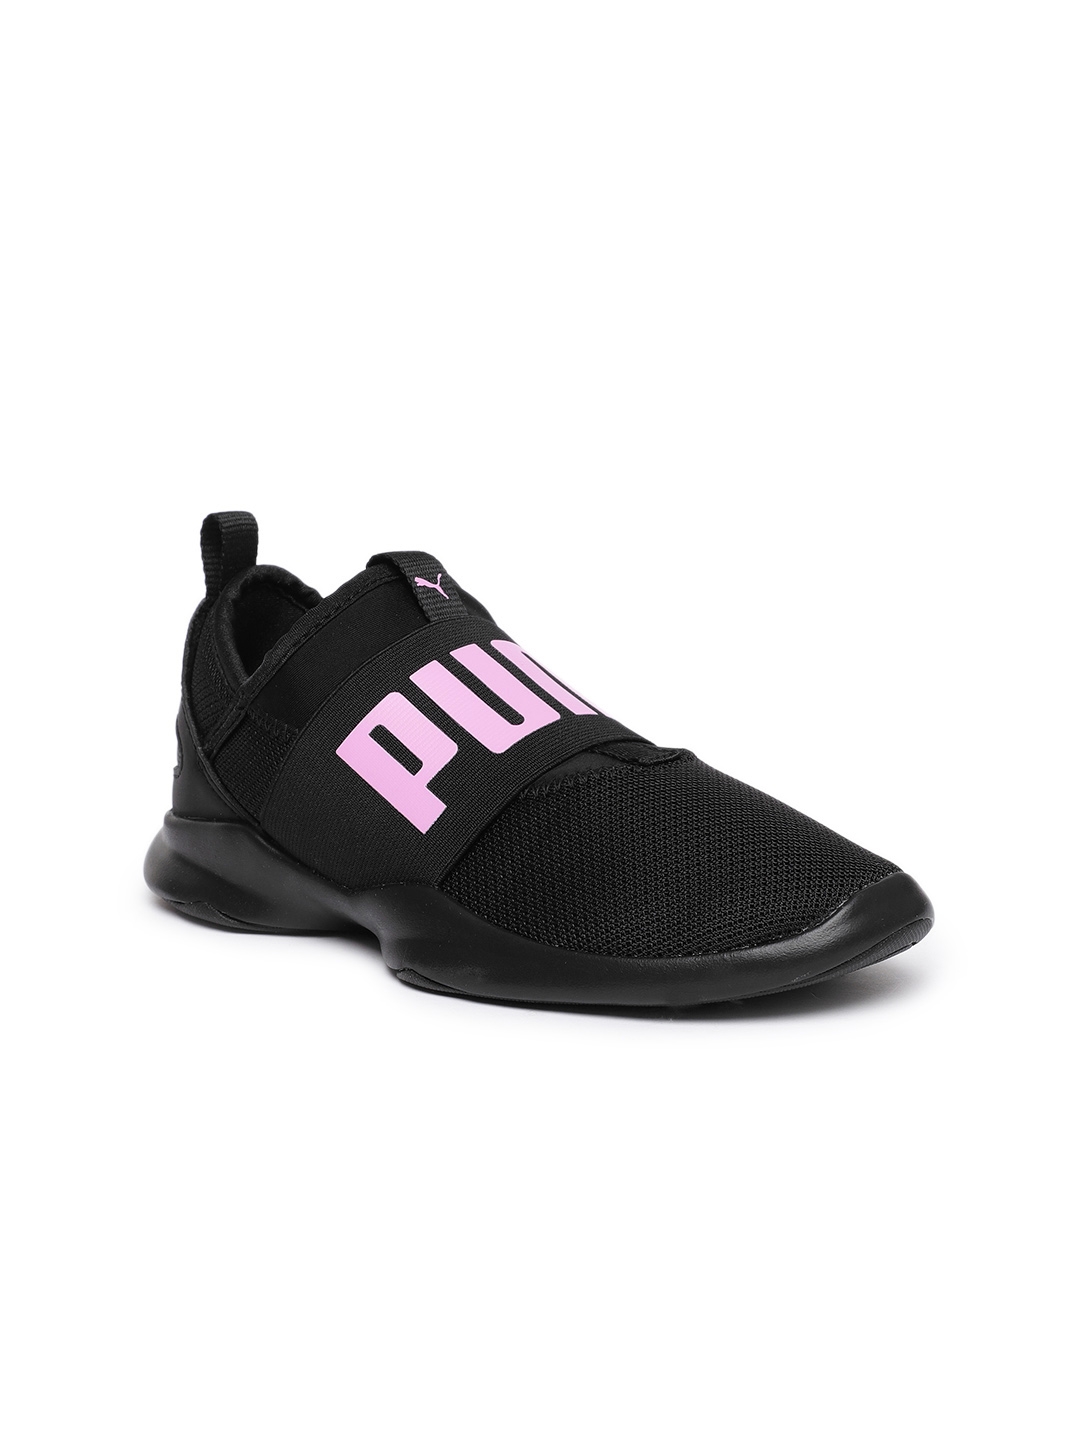 Buy Puma Kids Black Dare Jr Sneakers 